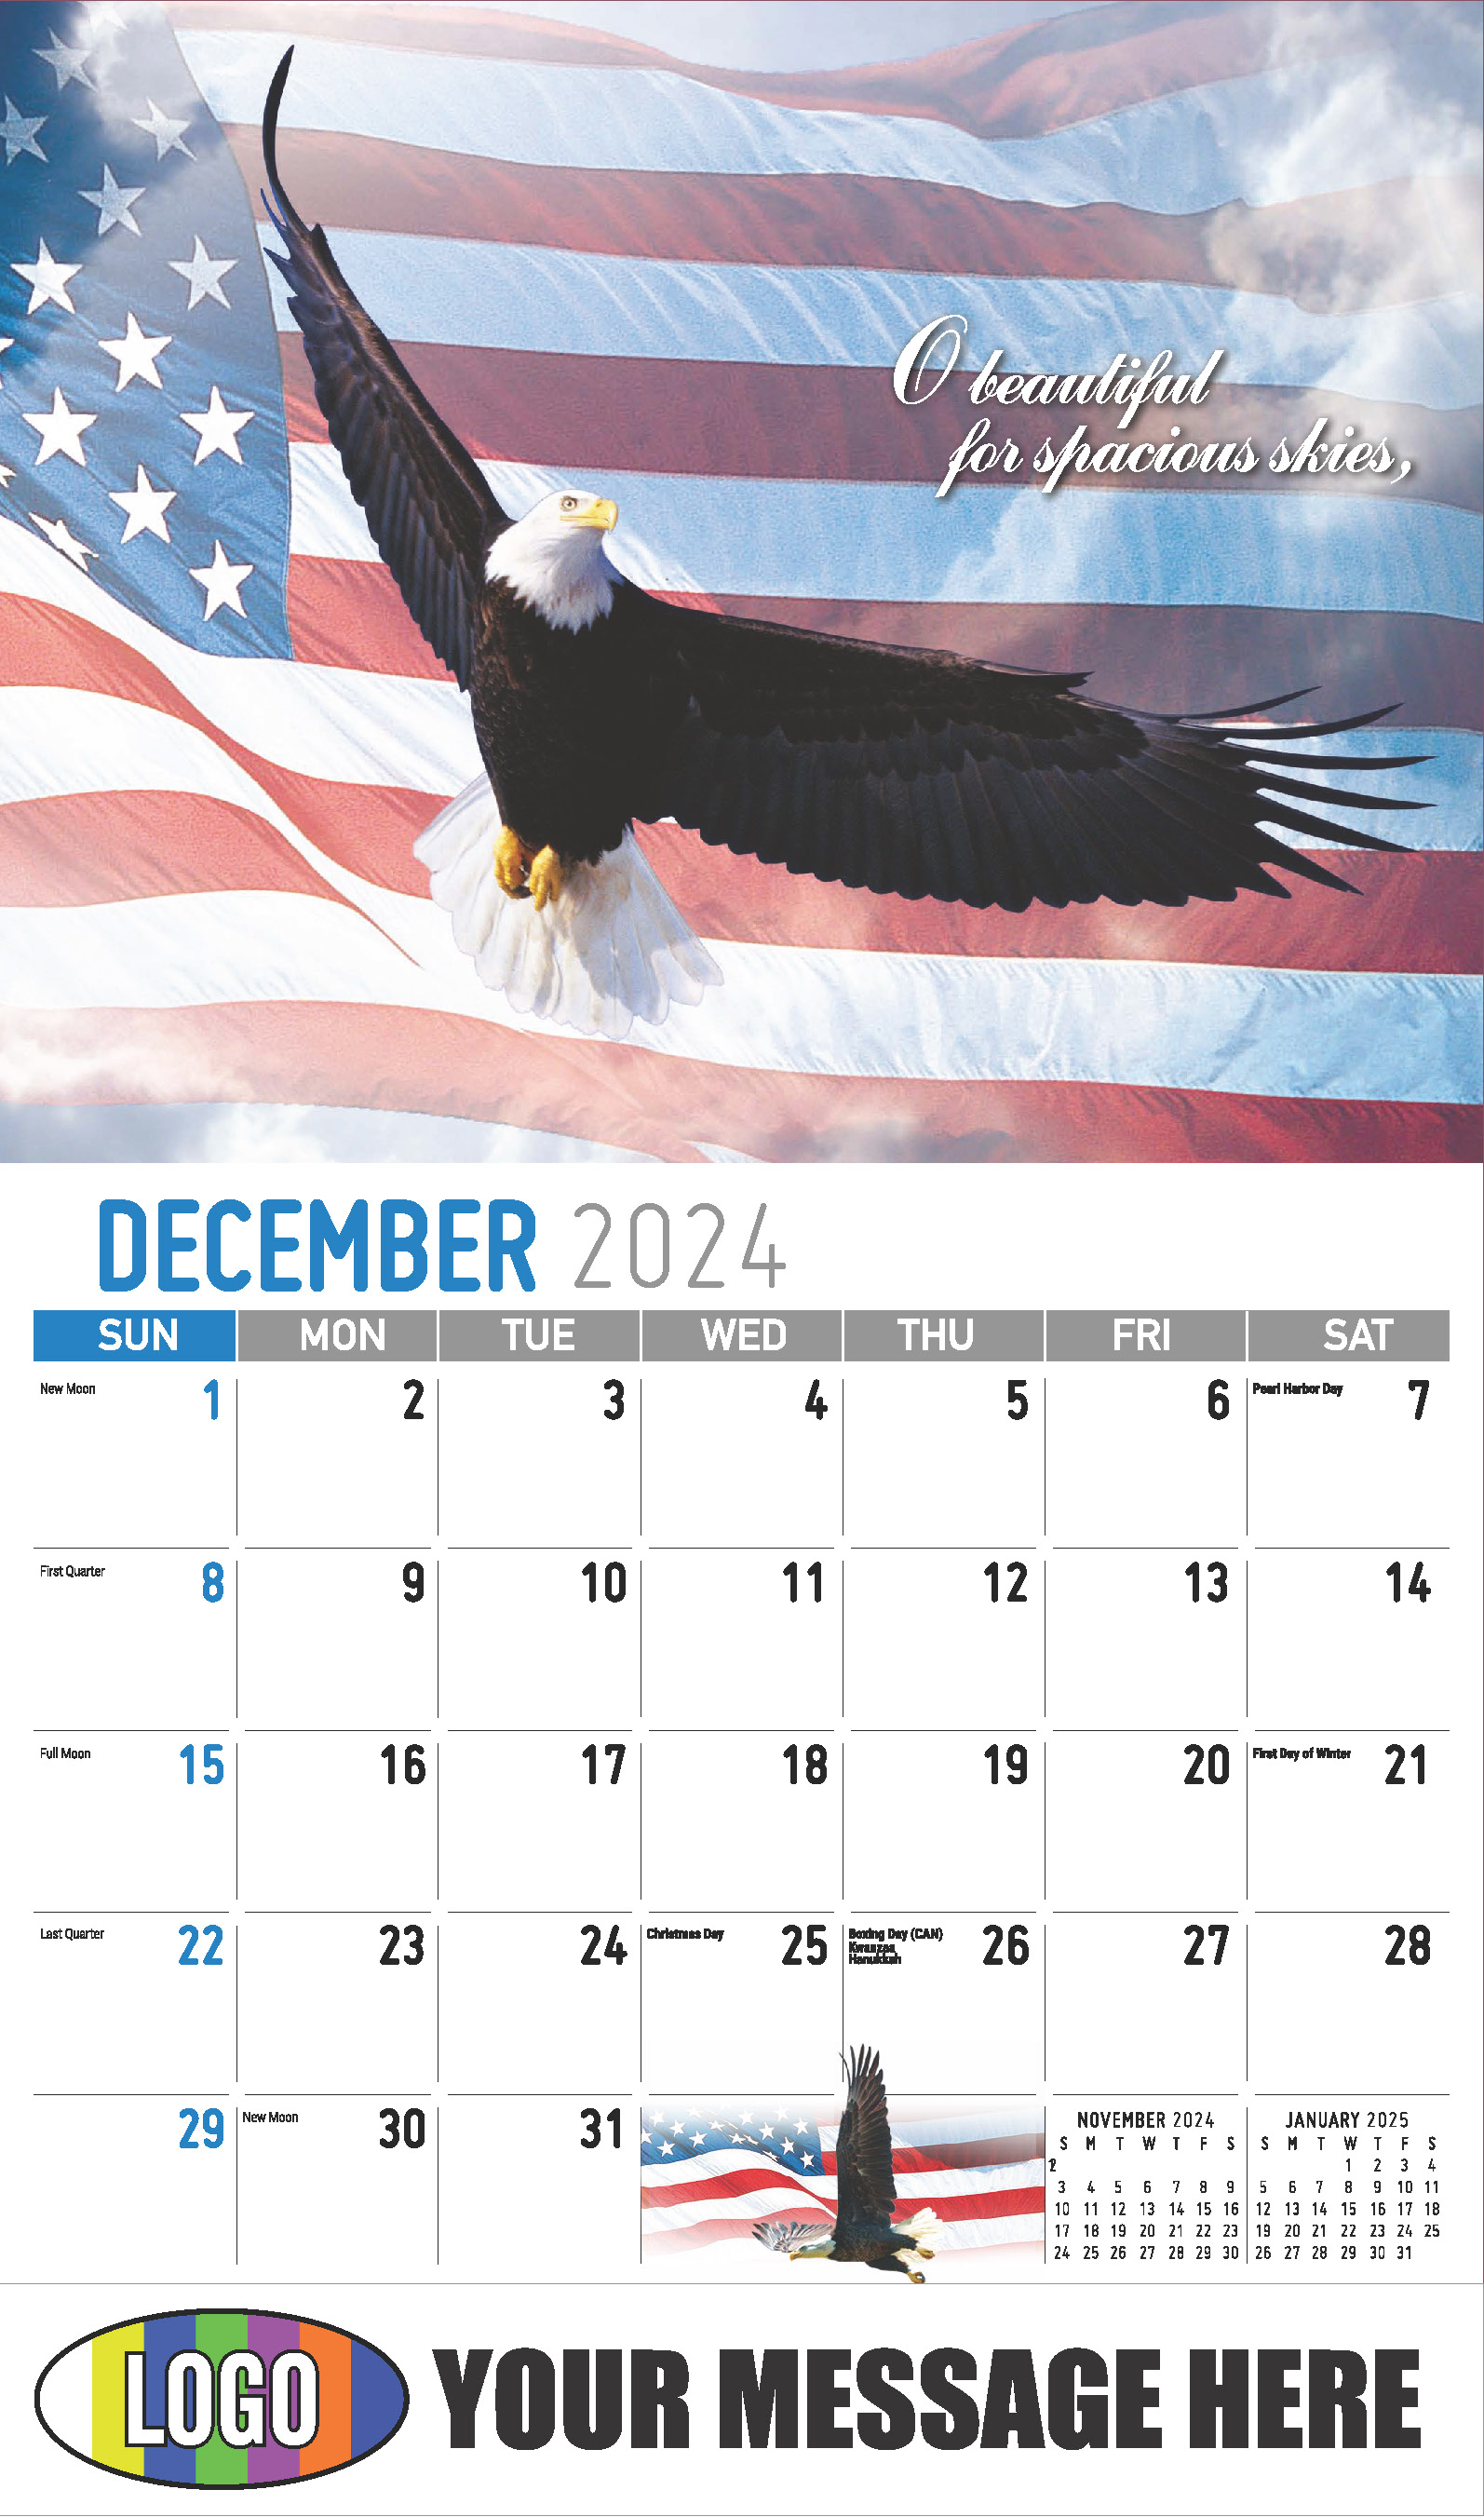 America the Beautiful  2025 Business Advertising Wall Calendar - December_a